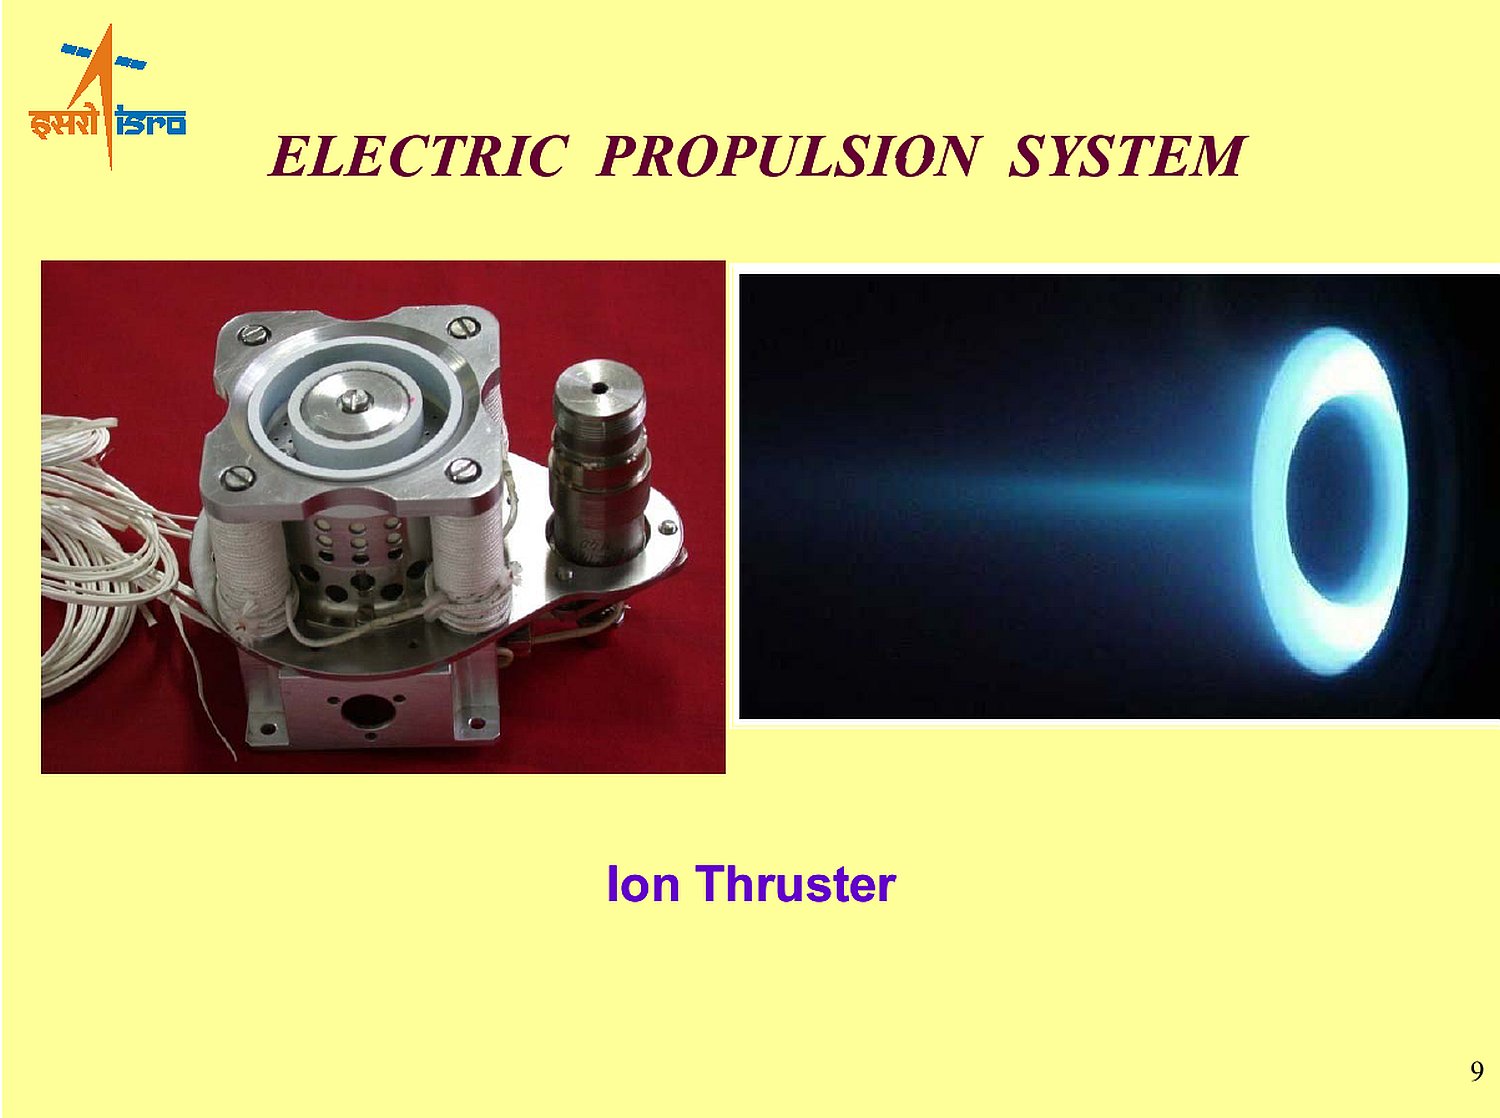 Electric-Propulsion-Ion-Thruster-ISRO.jpg